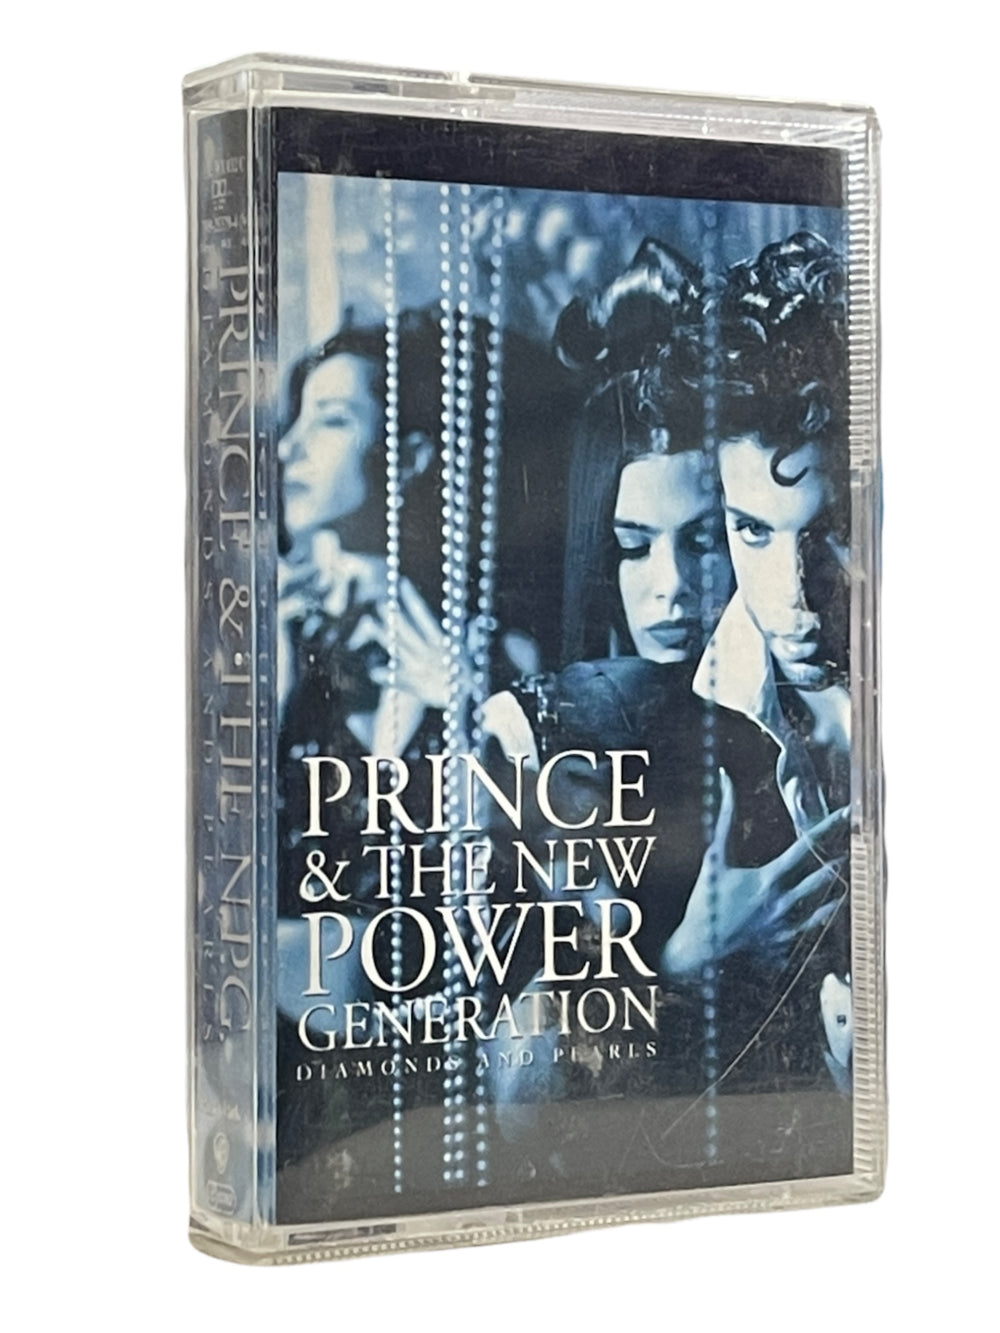 Prince – & The New Power Generation – Diamonds & Pearls Cassette Album Europe Preloved: 1991